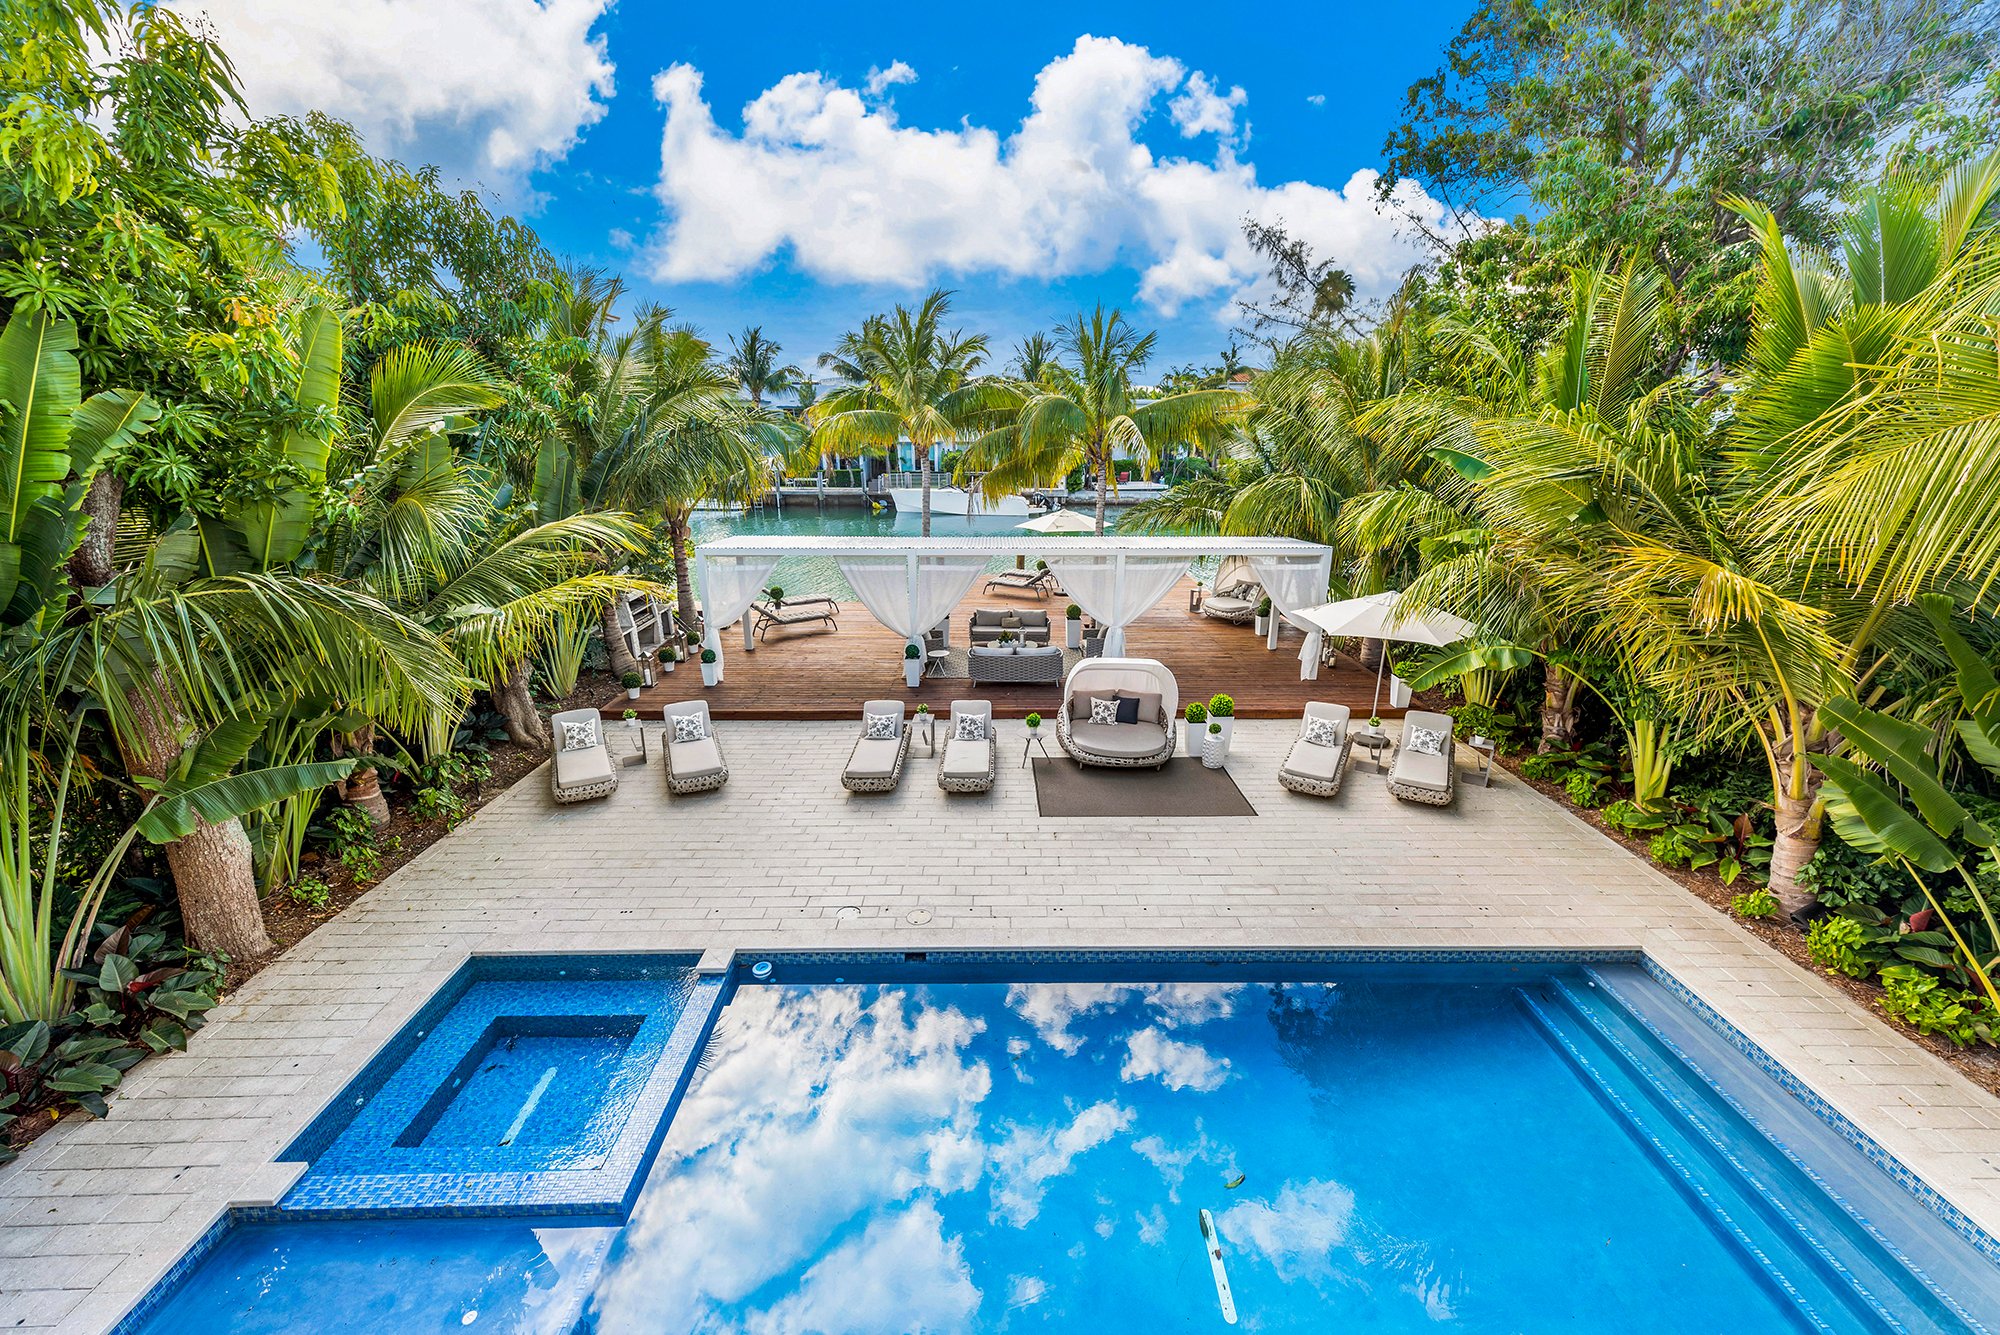 Luxury Vacation Rentals & Luxury Rentals Miami